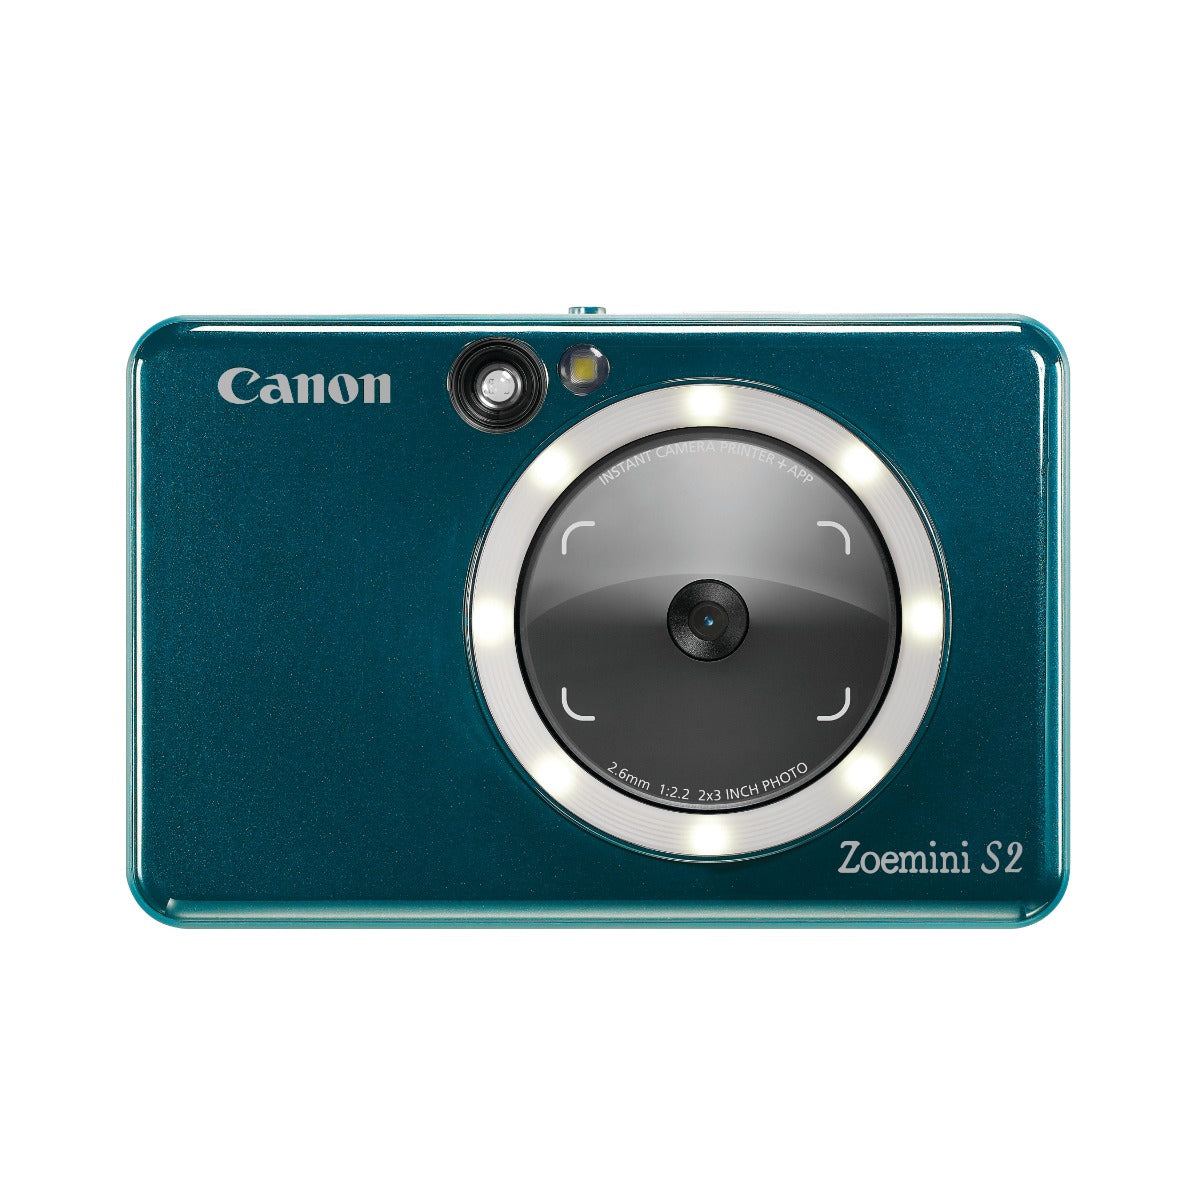 Product Image of Canon Zoemini S2 - Slimline Instant Camera and Pocket Photo Printer